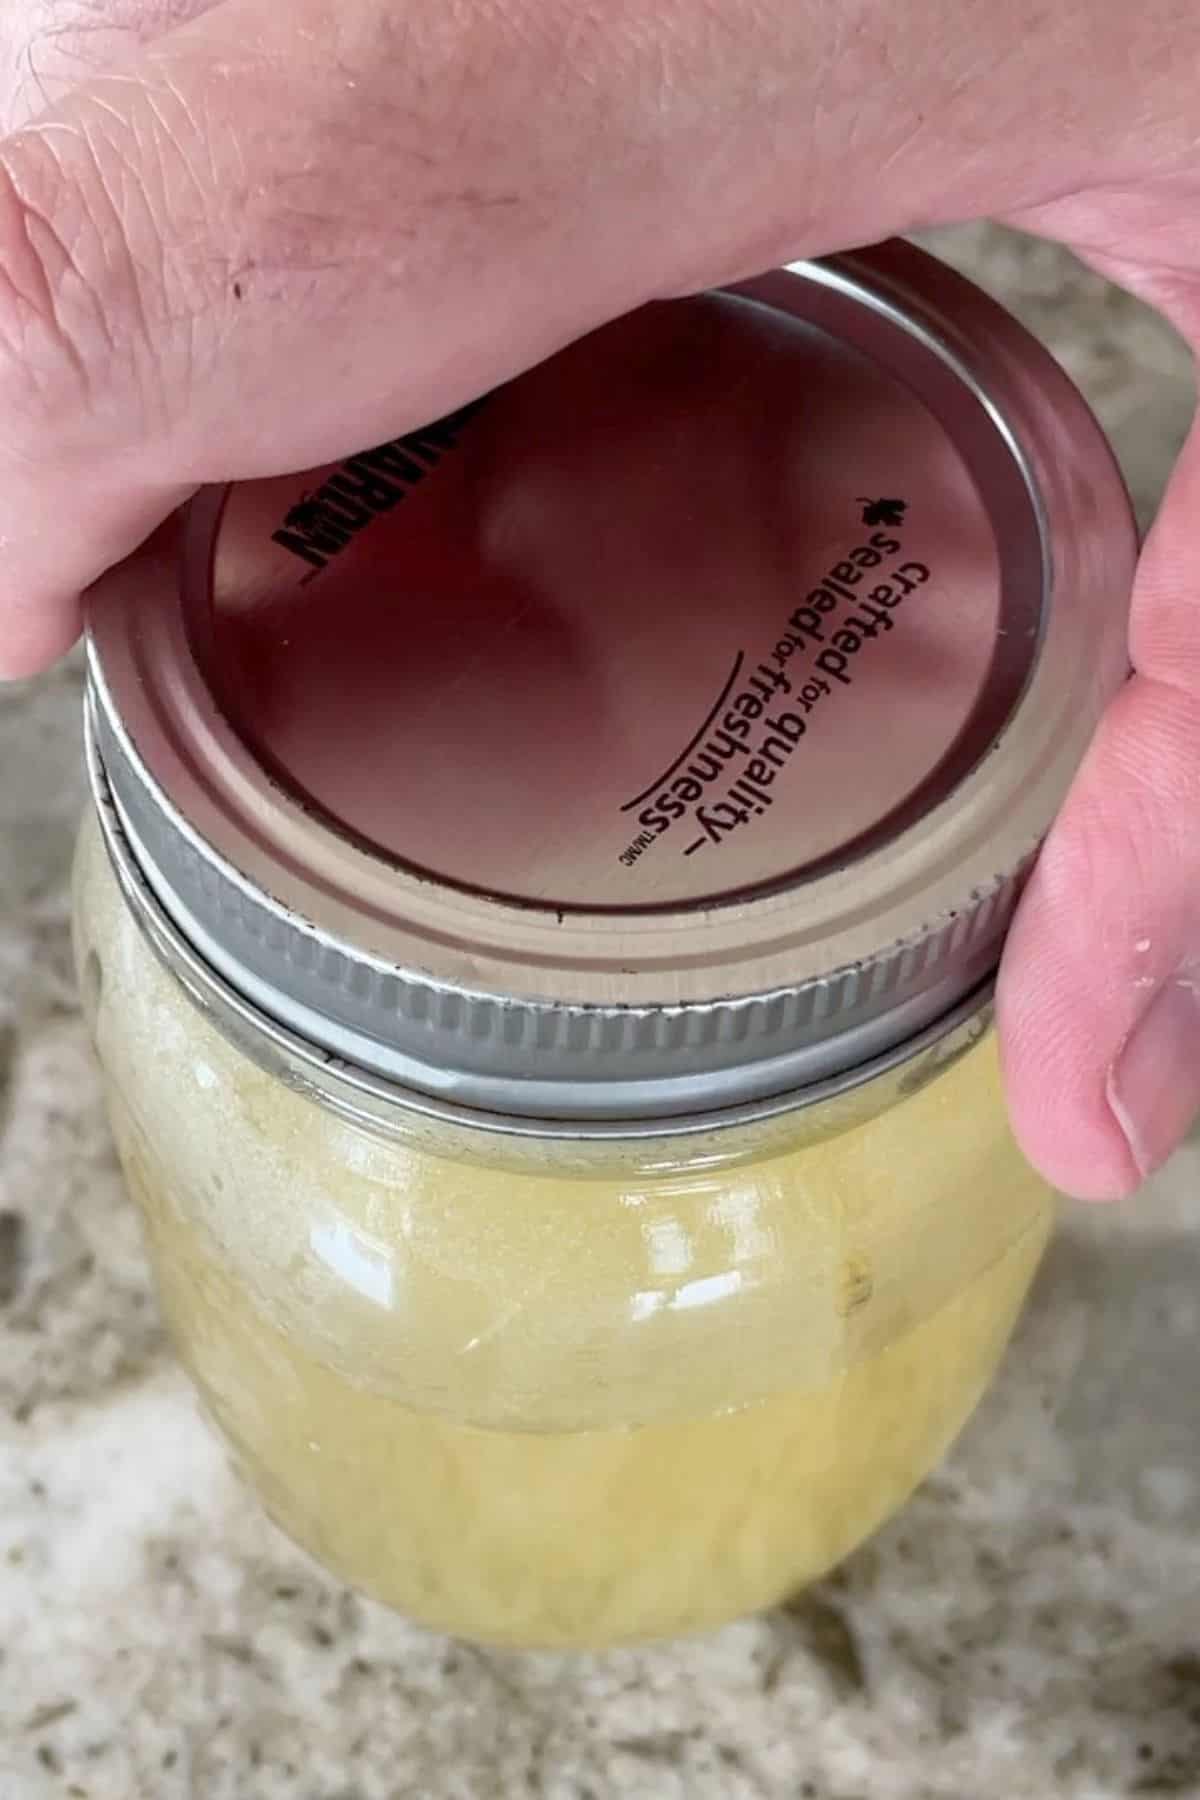 tightening lid on mason jar